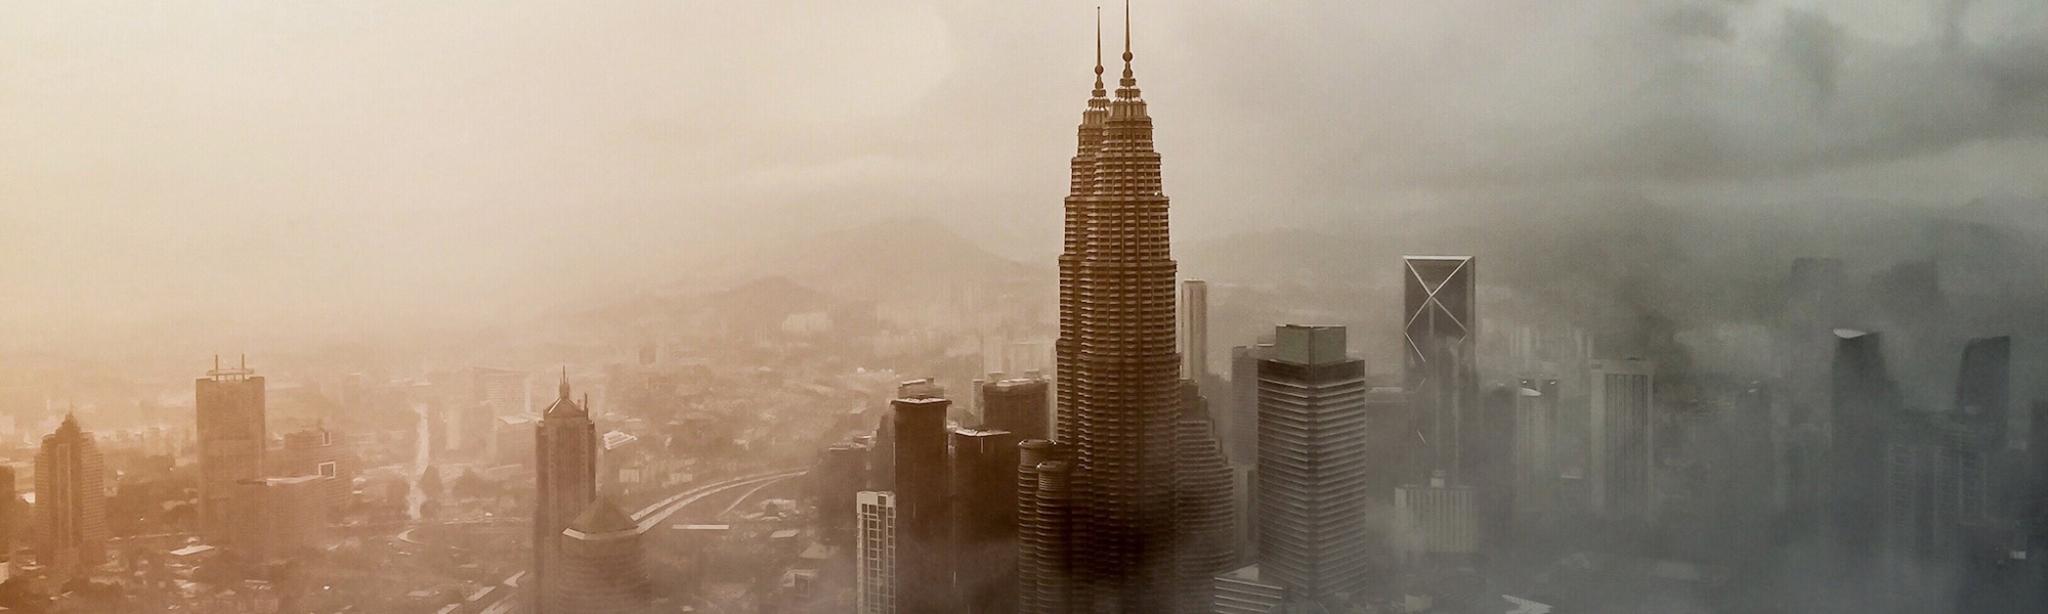 Malaysian cityscape pollution